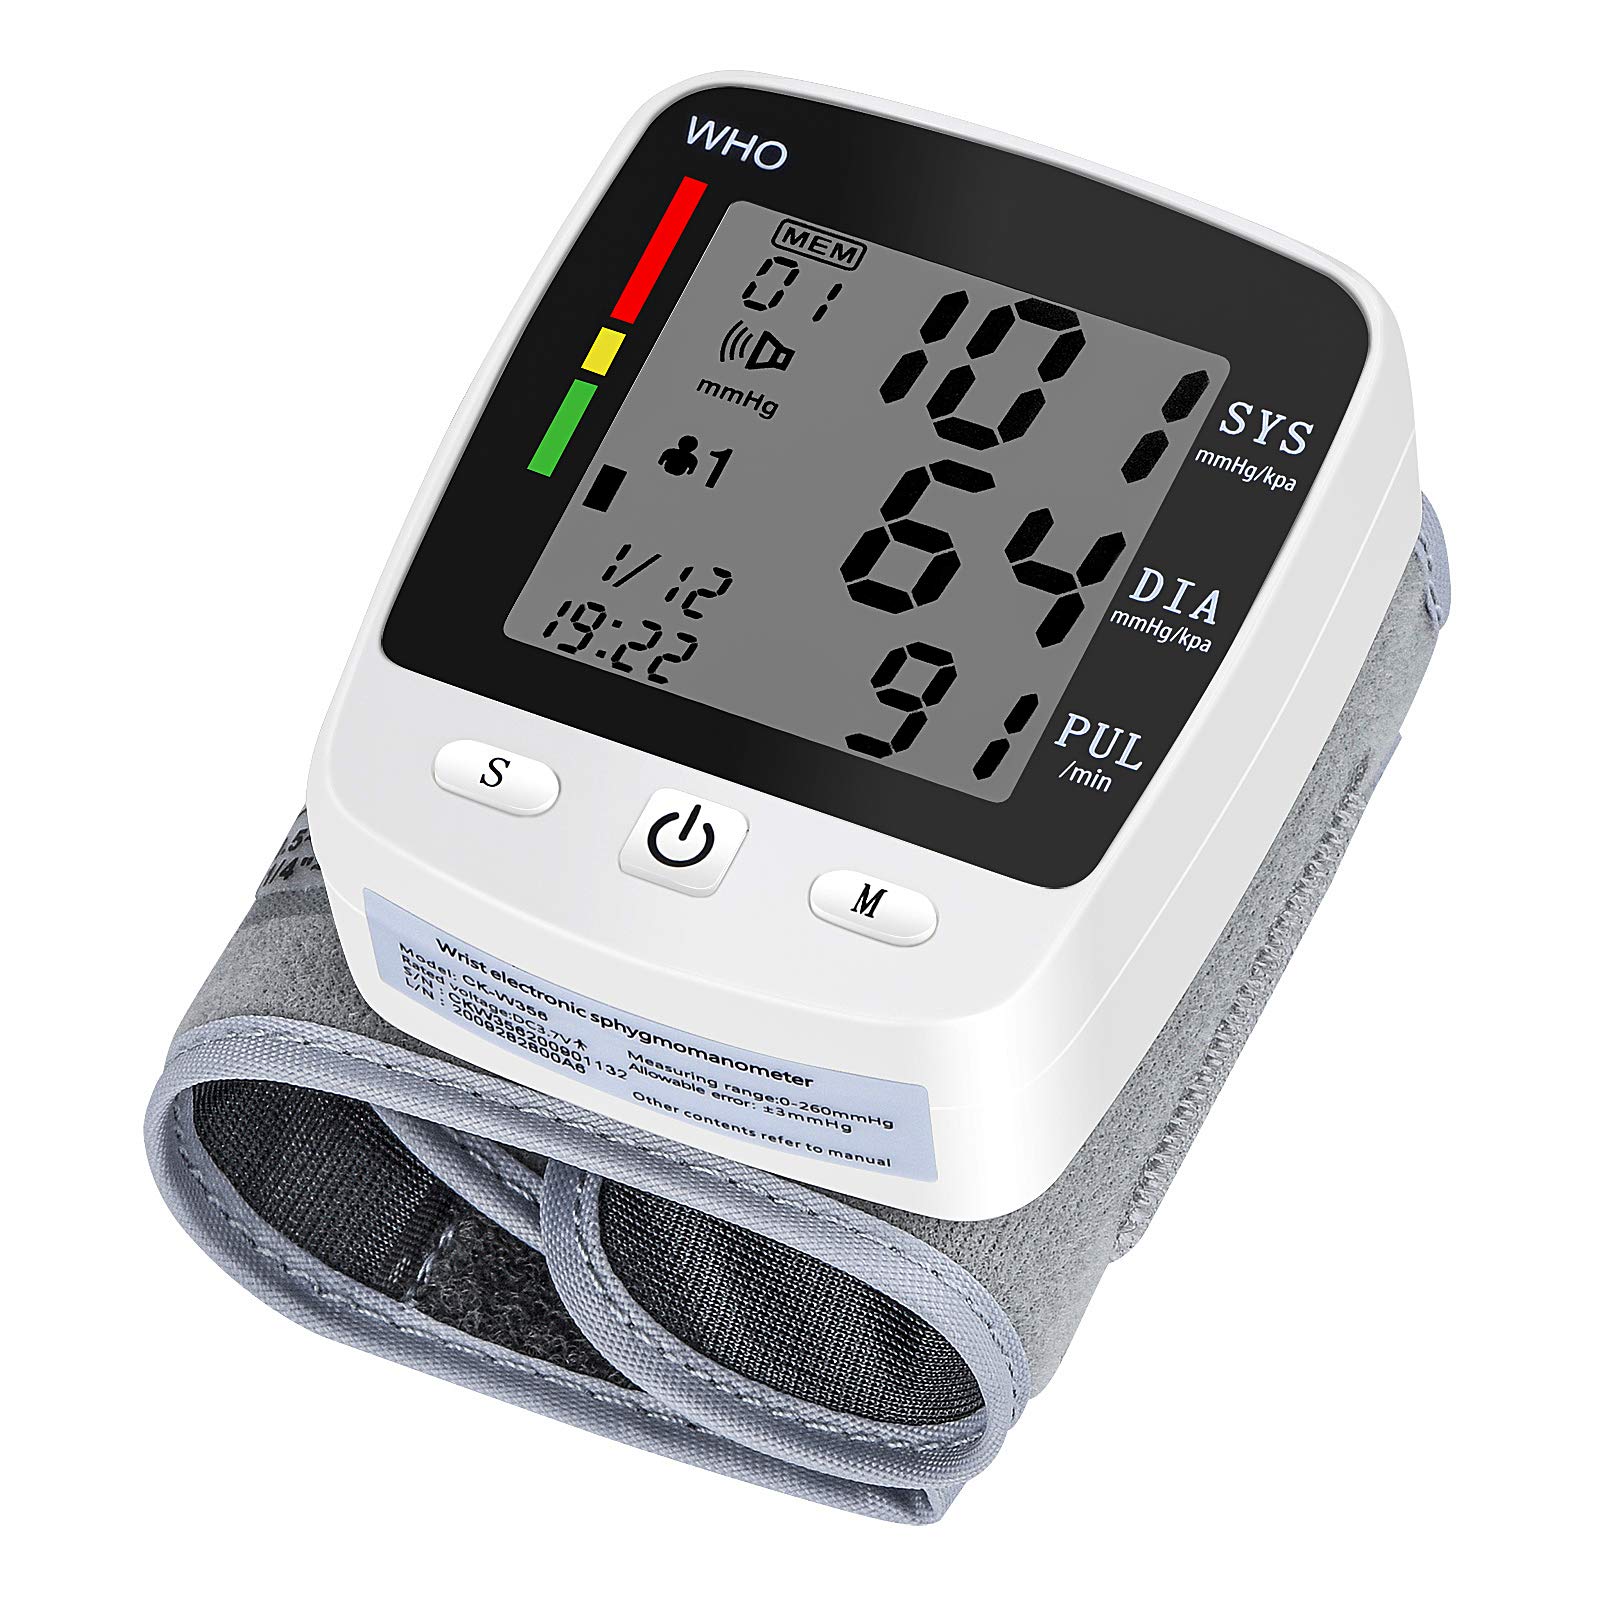 Homedics® Wrist Cuff 700 Series Blood Pressure Monitor